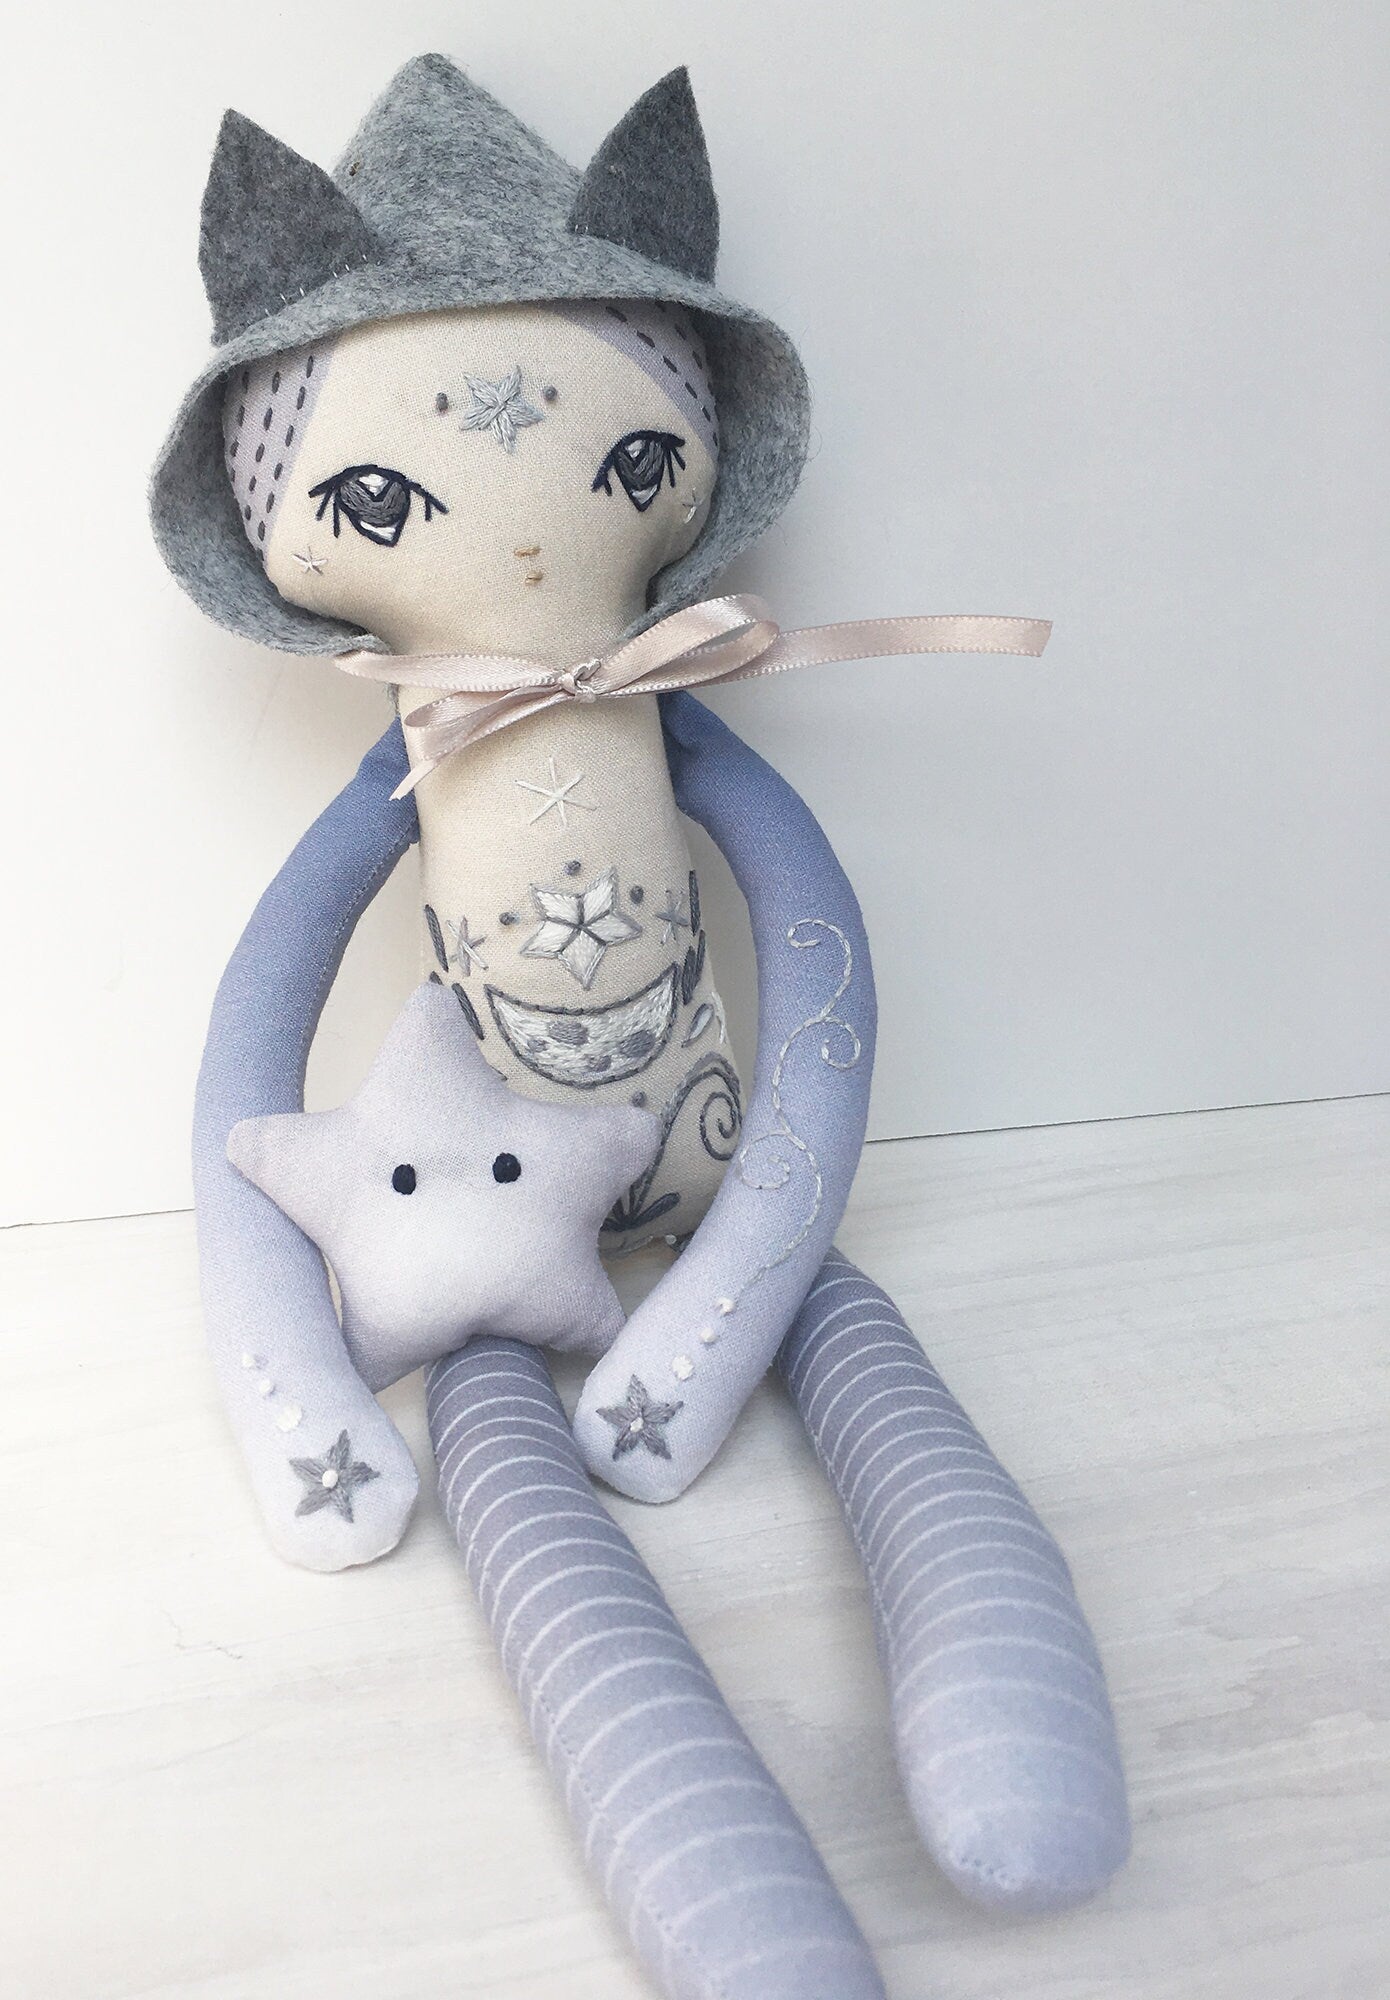 DIY Cut and Sew Luna Fey cloth doll with embroidery